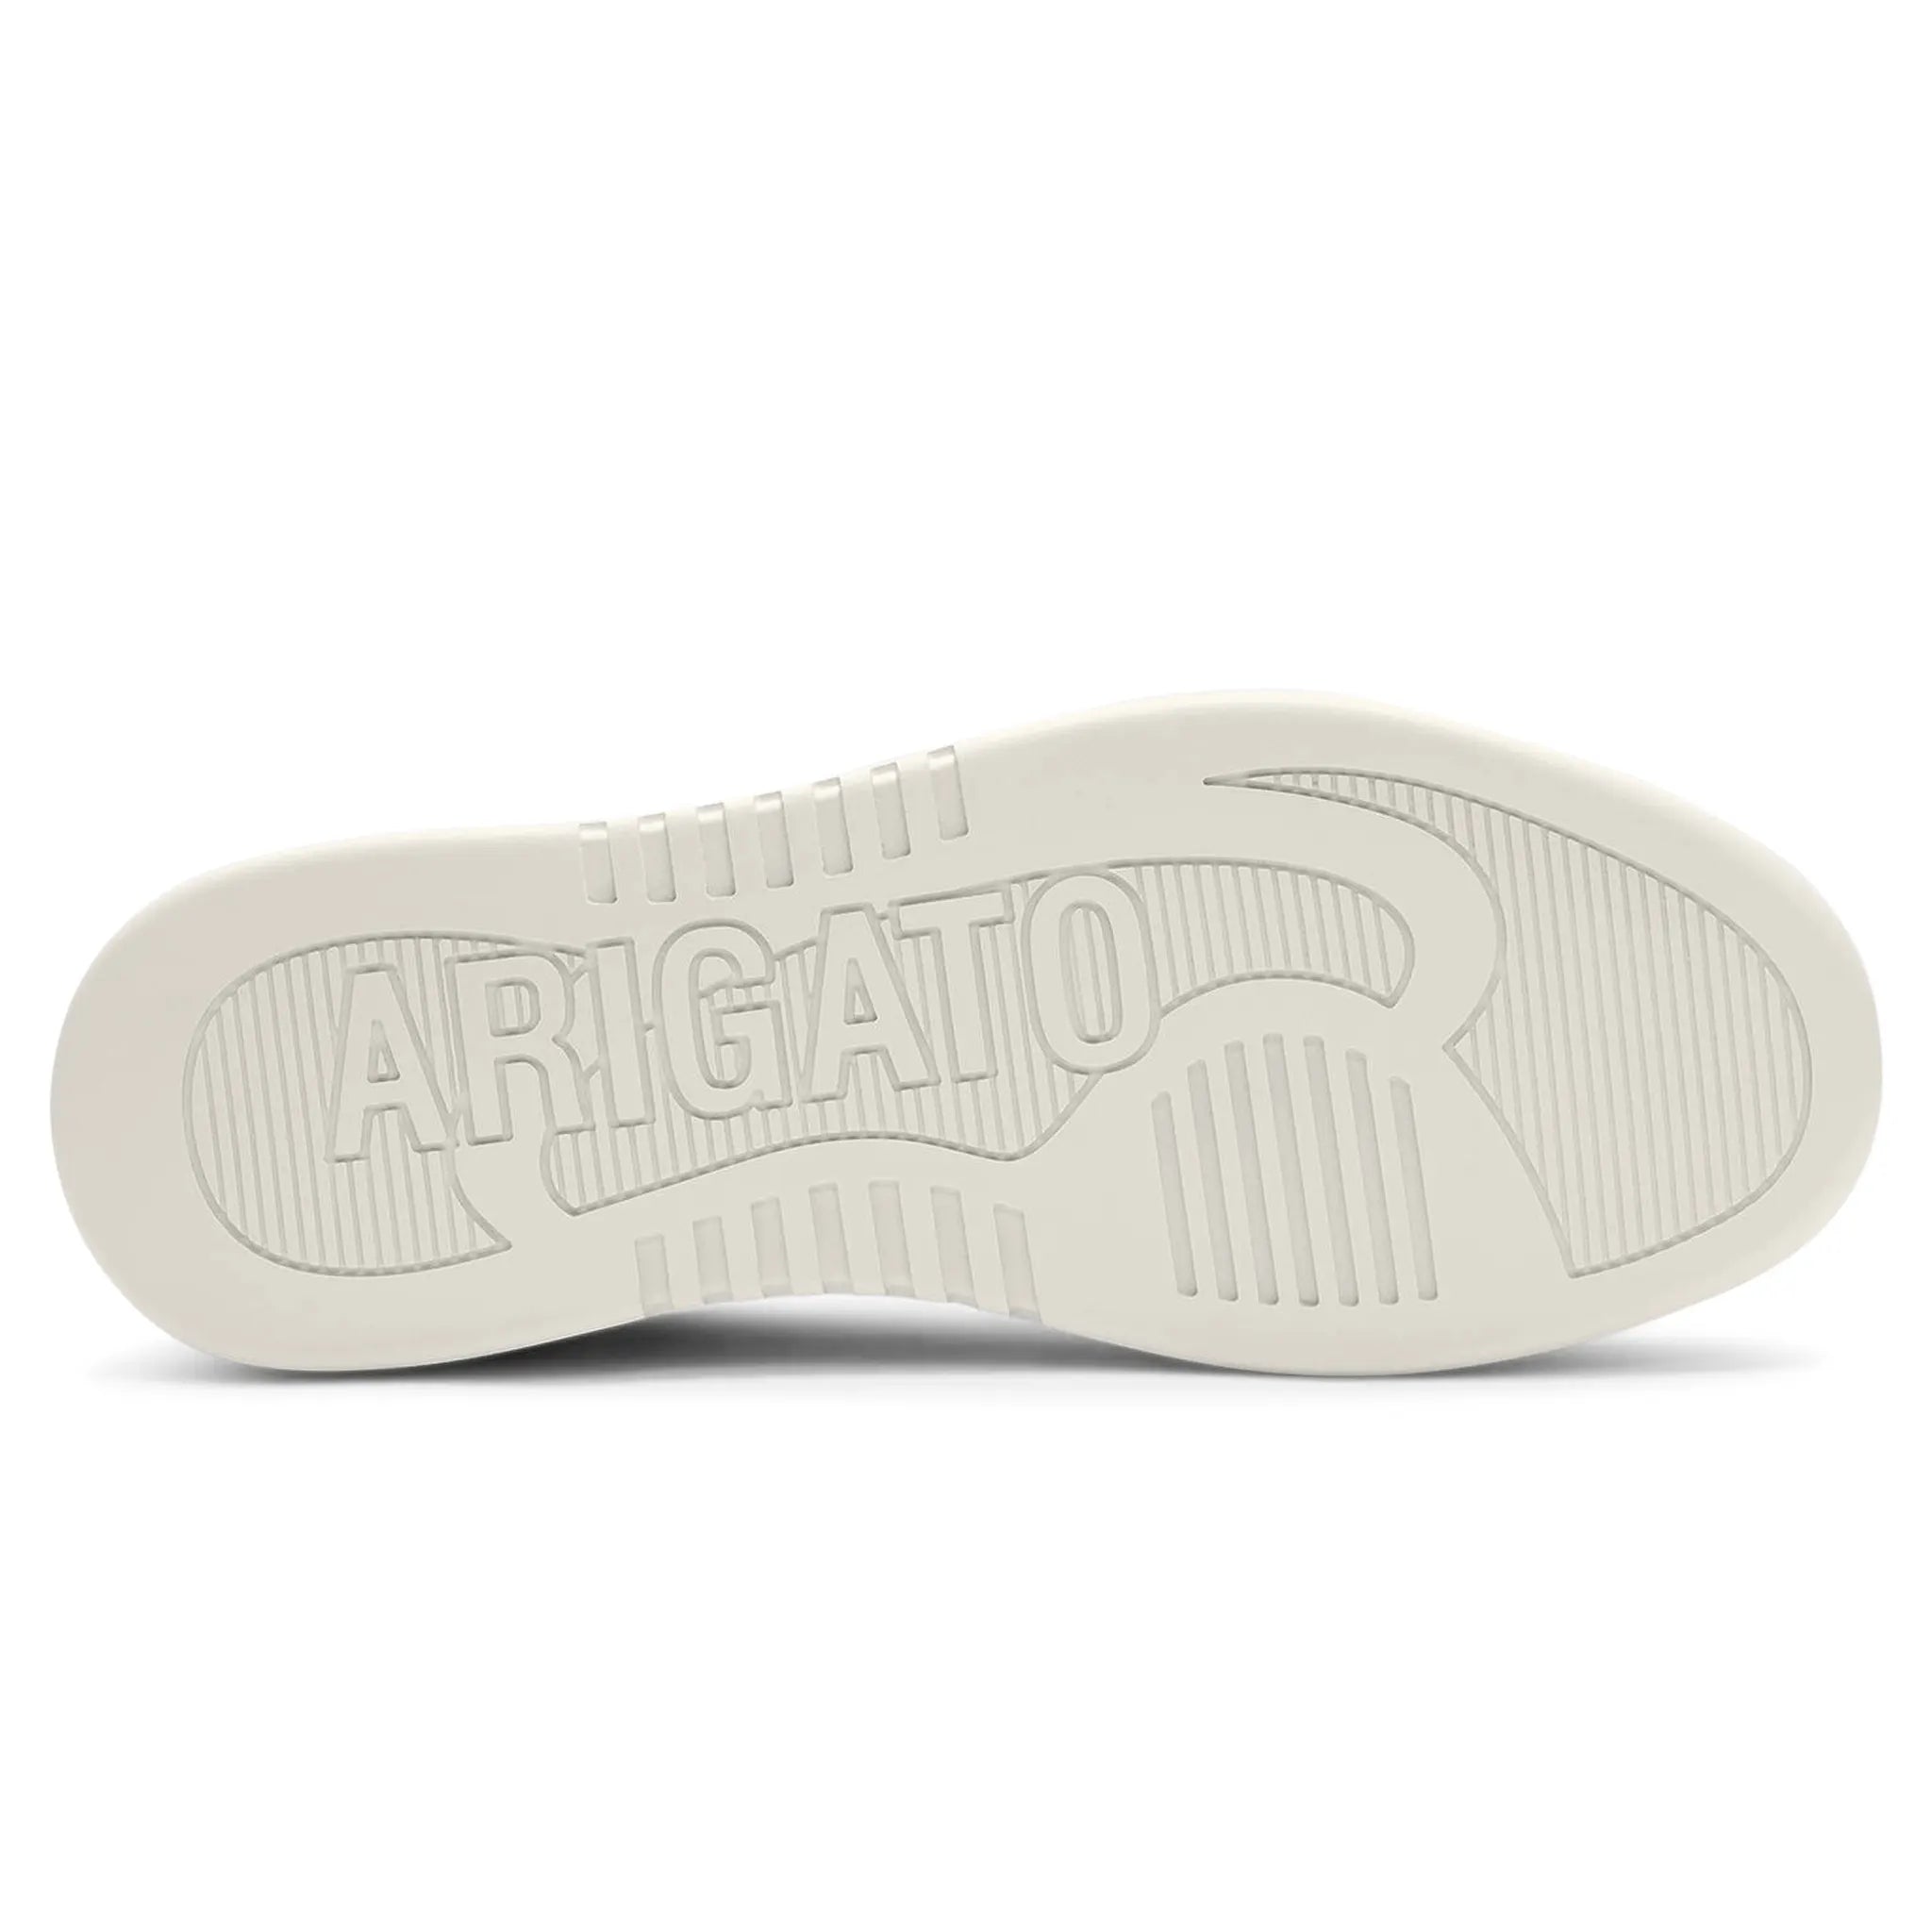 Sole view of Axel Arigato Dice Low Beige Light Grey Sneaker F1697006